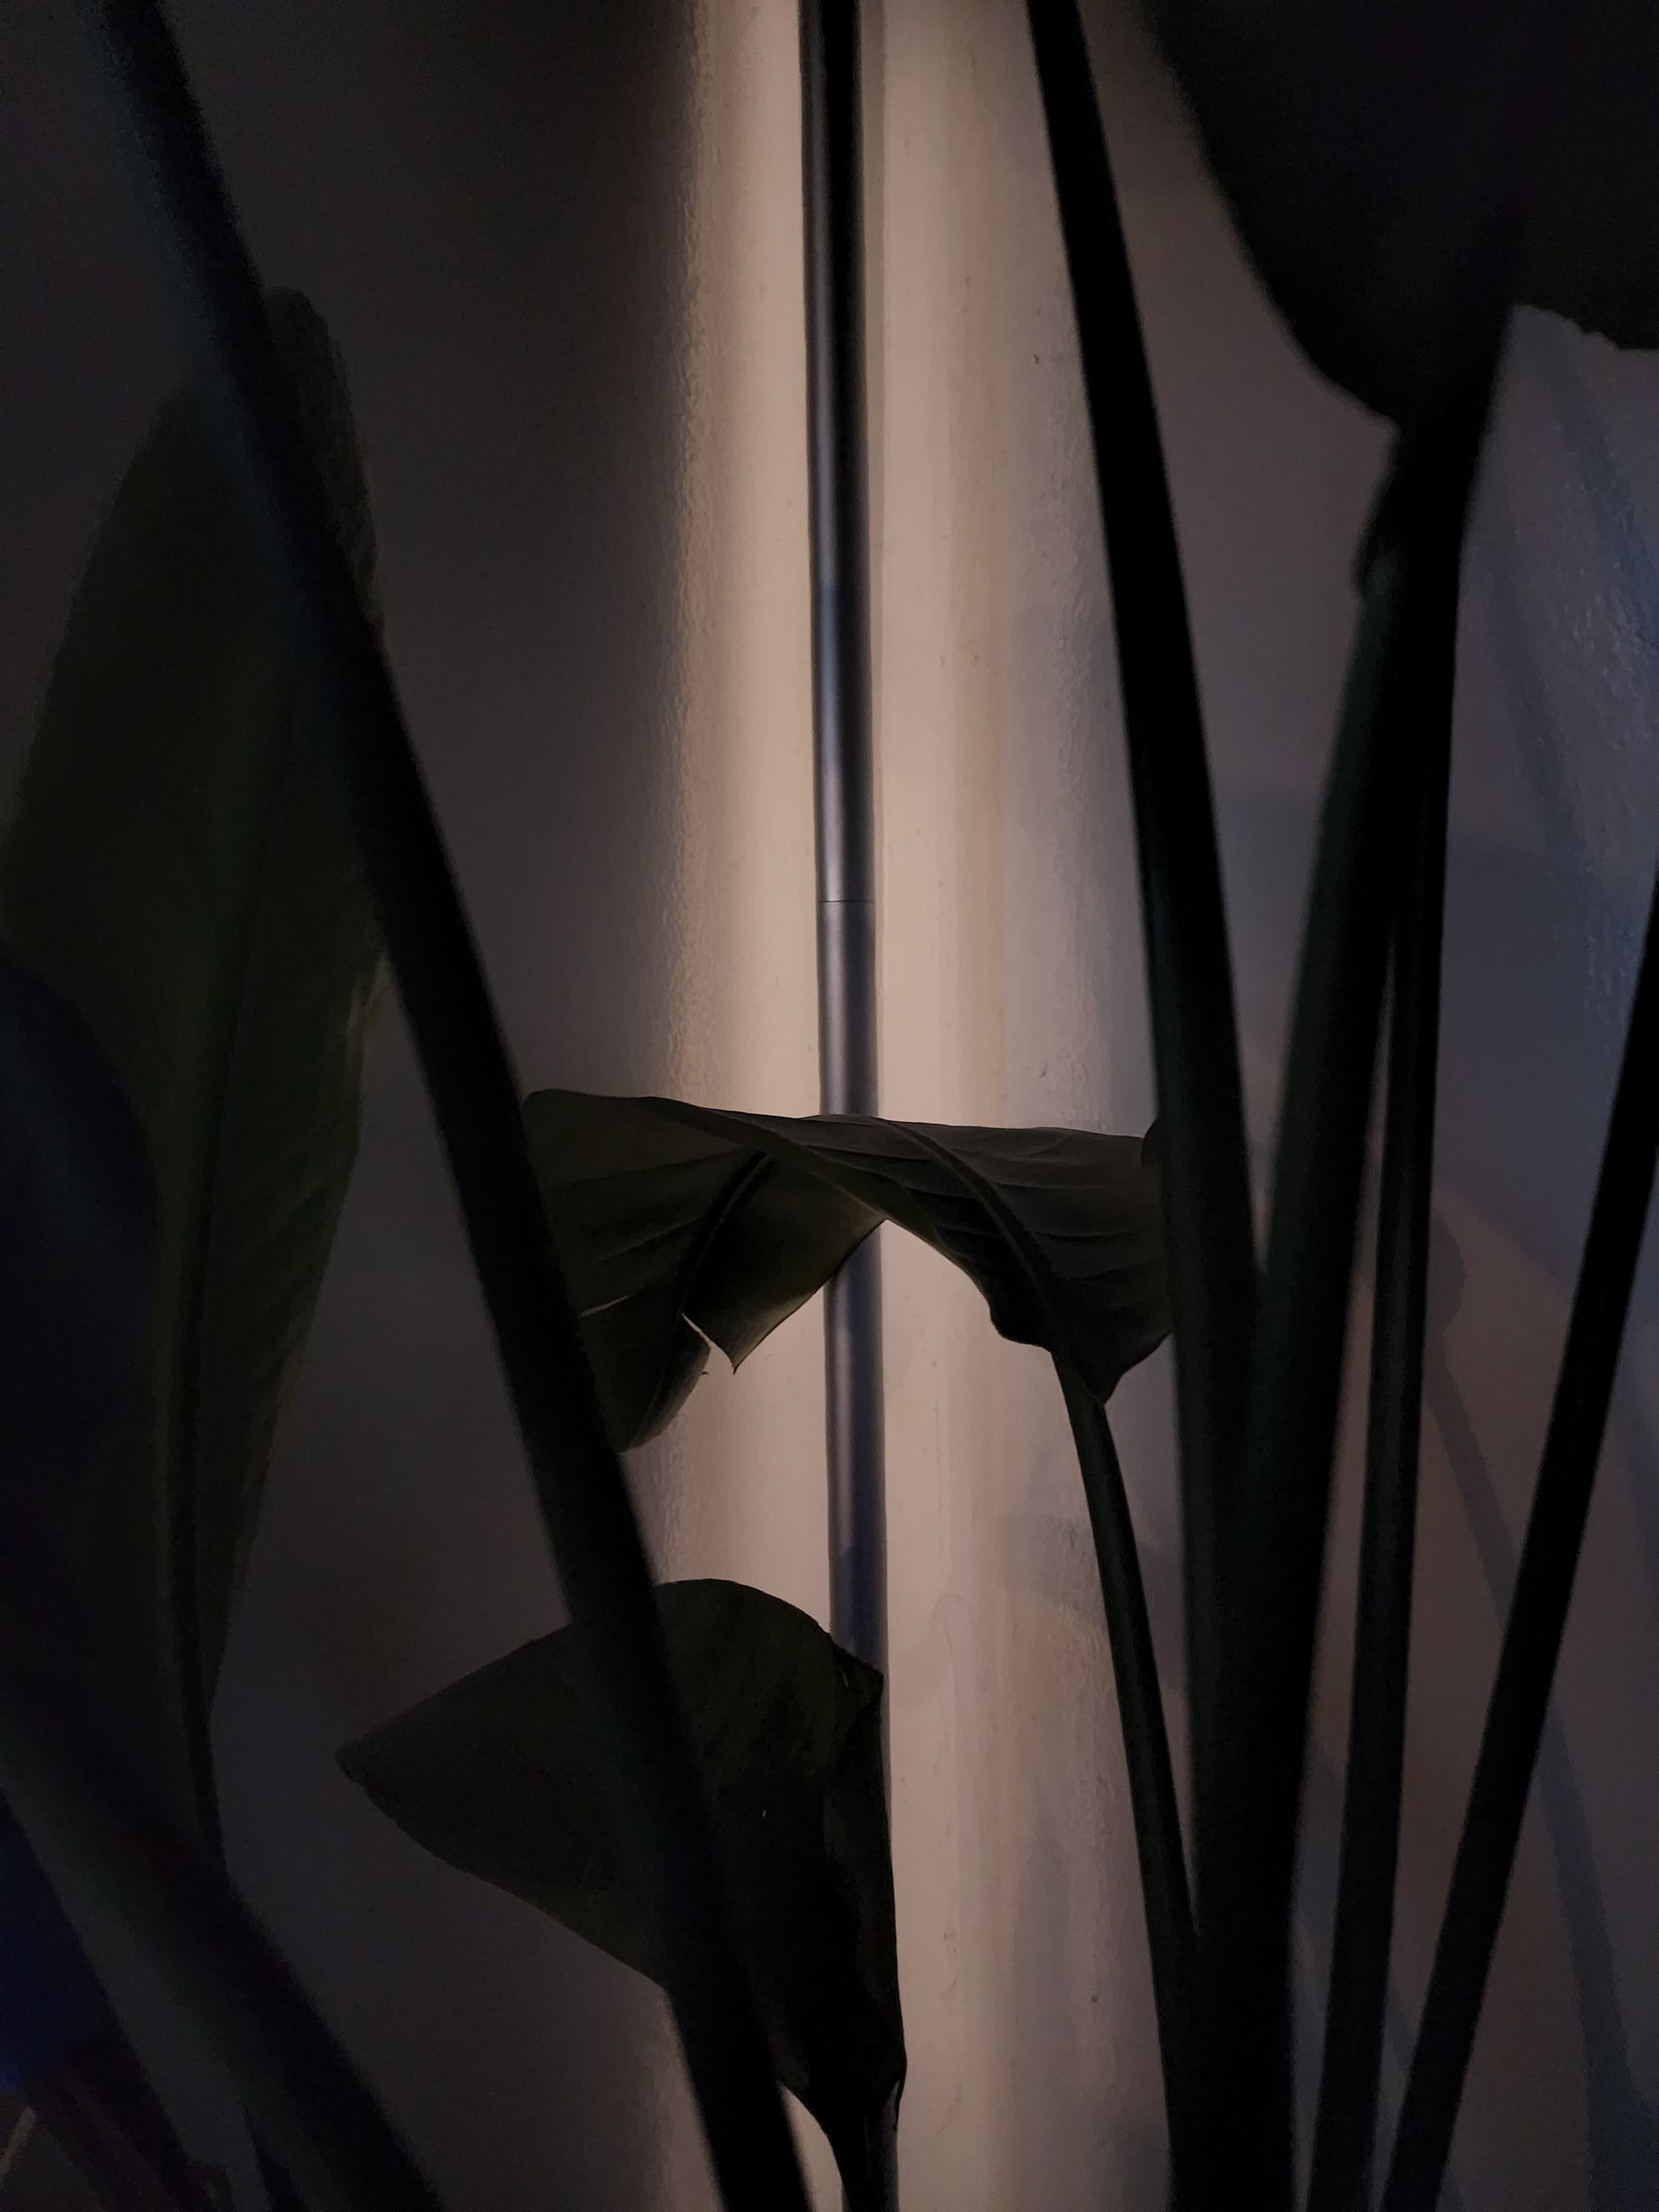 A dark scene of a houseplant shot without pixel binning.